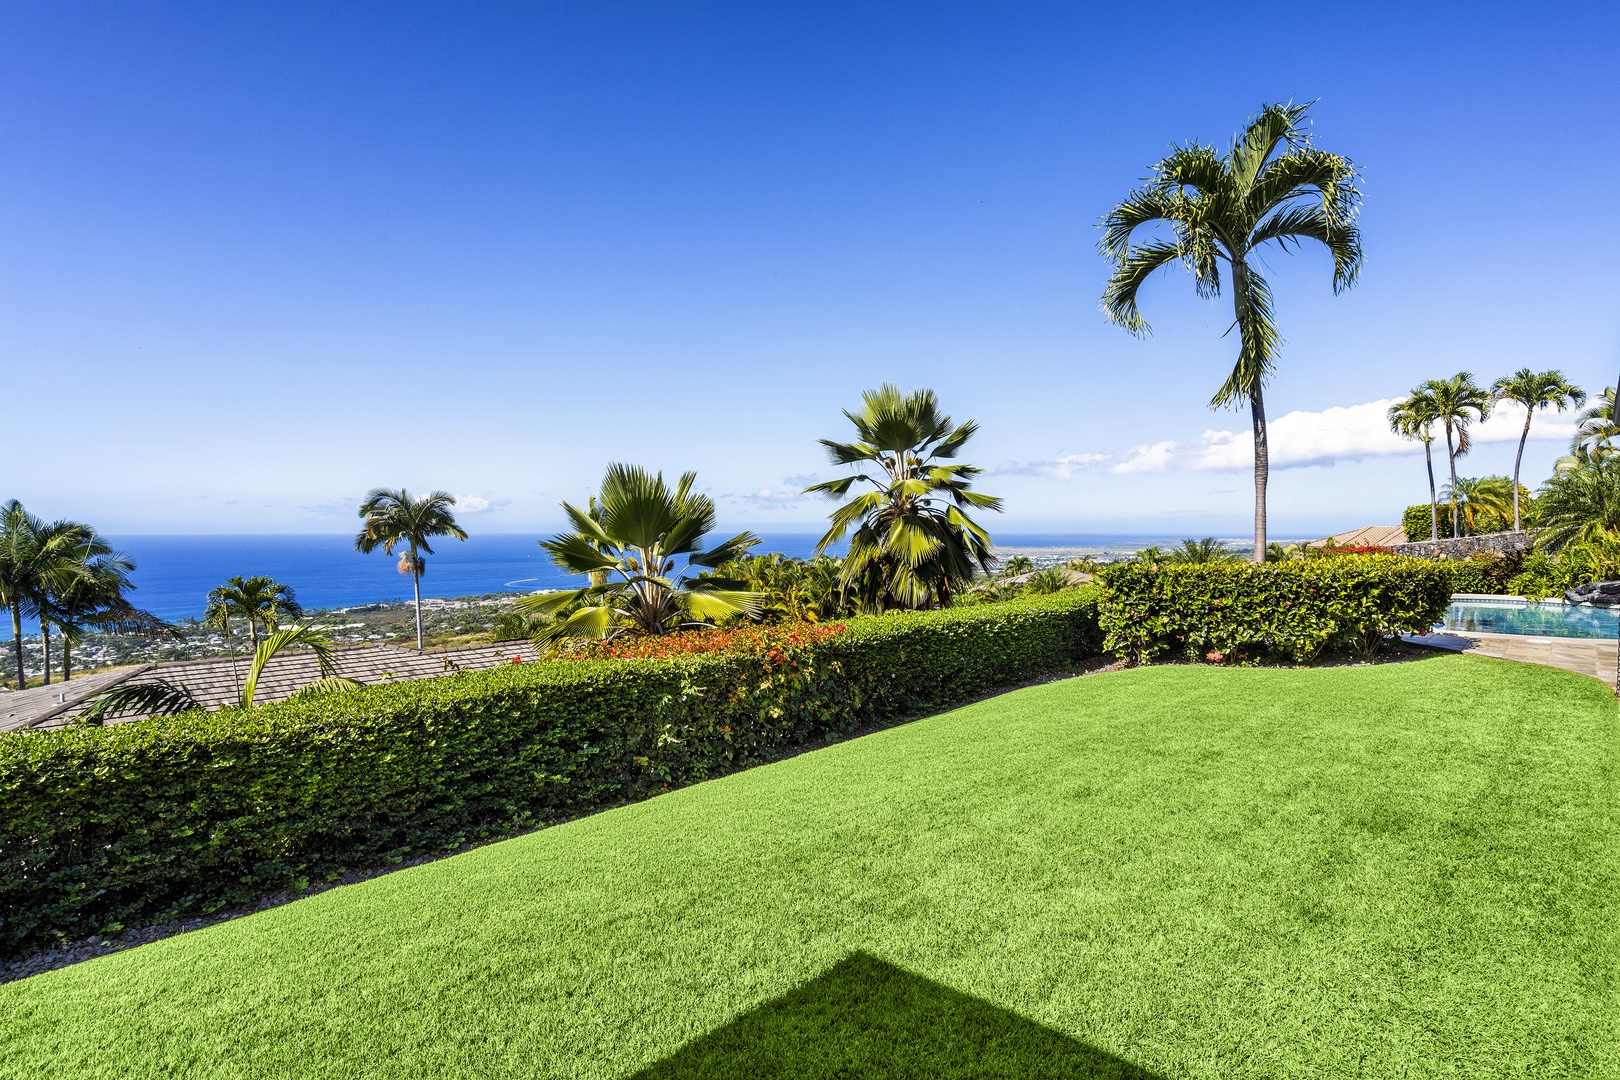 Kailua Kona Vacation Rentals, Hale Aikane - Lush green grass!